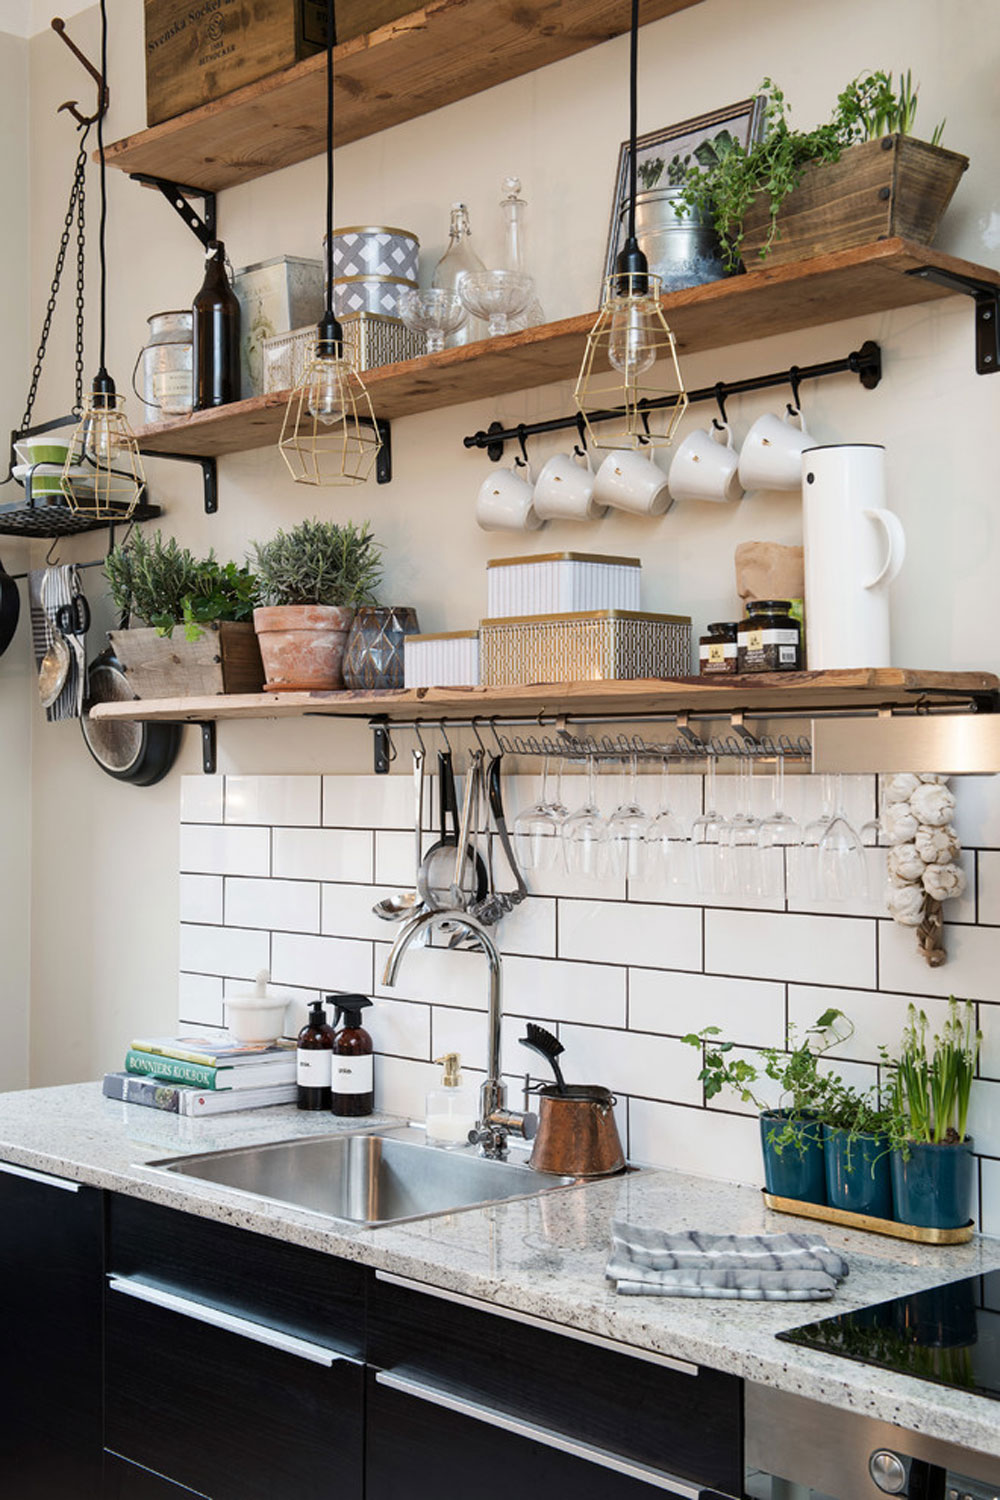 Nordenski%C3%B6ldsgatan-5-by-studiocuvier.se_ How to organize and decorate a small apartment kitchen